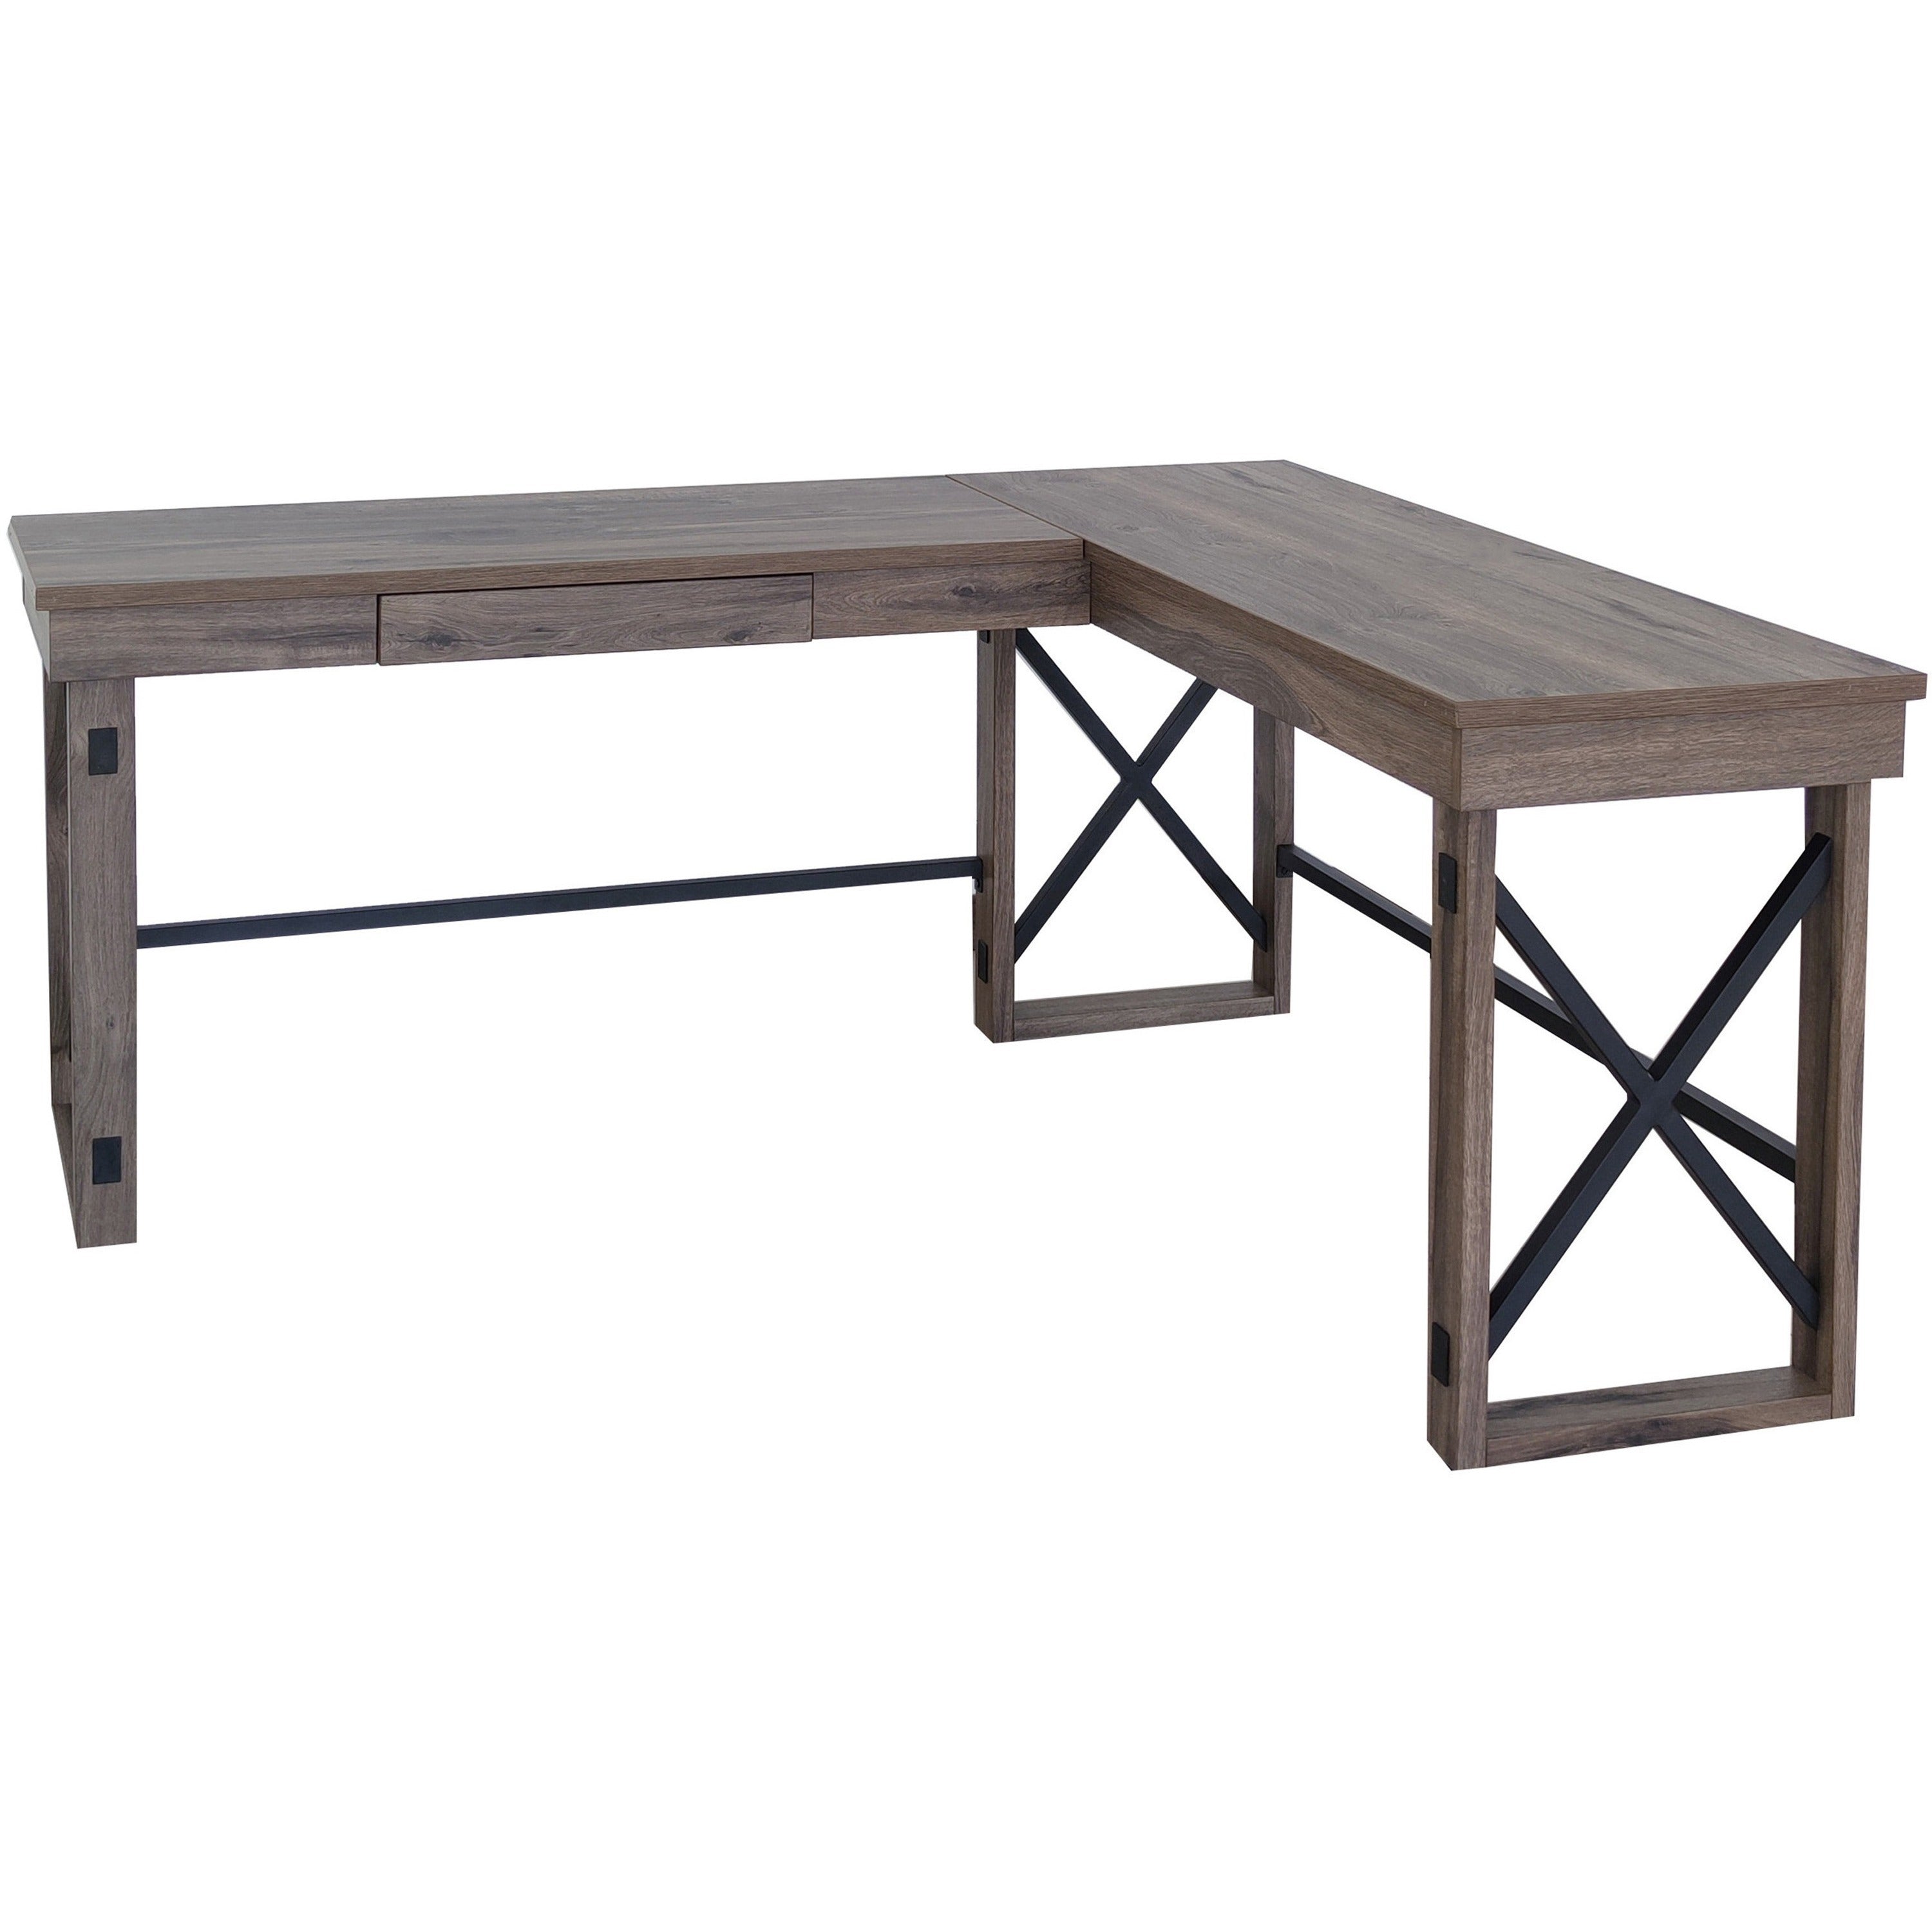 lys-l-shaped-industrial-desk-for-table-topl-shaped-top-200-lb-capacity-x-5213-table-top-width-x-1975-table-top-depth-2950-height-assembly-required-aged-oak-medium-density-fiberboard-mdf-1-each_lysdk100lrgk - 1